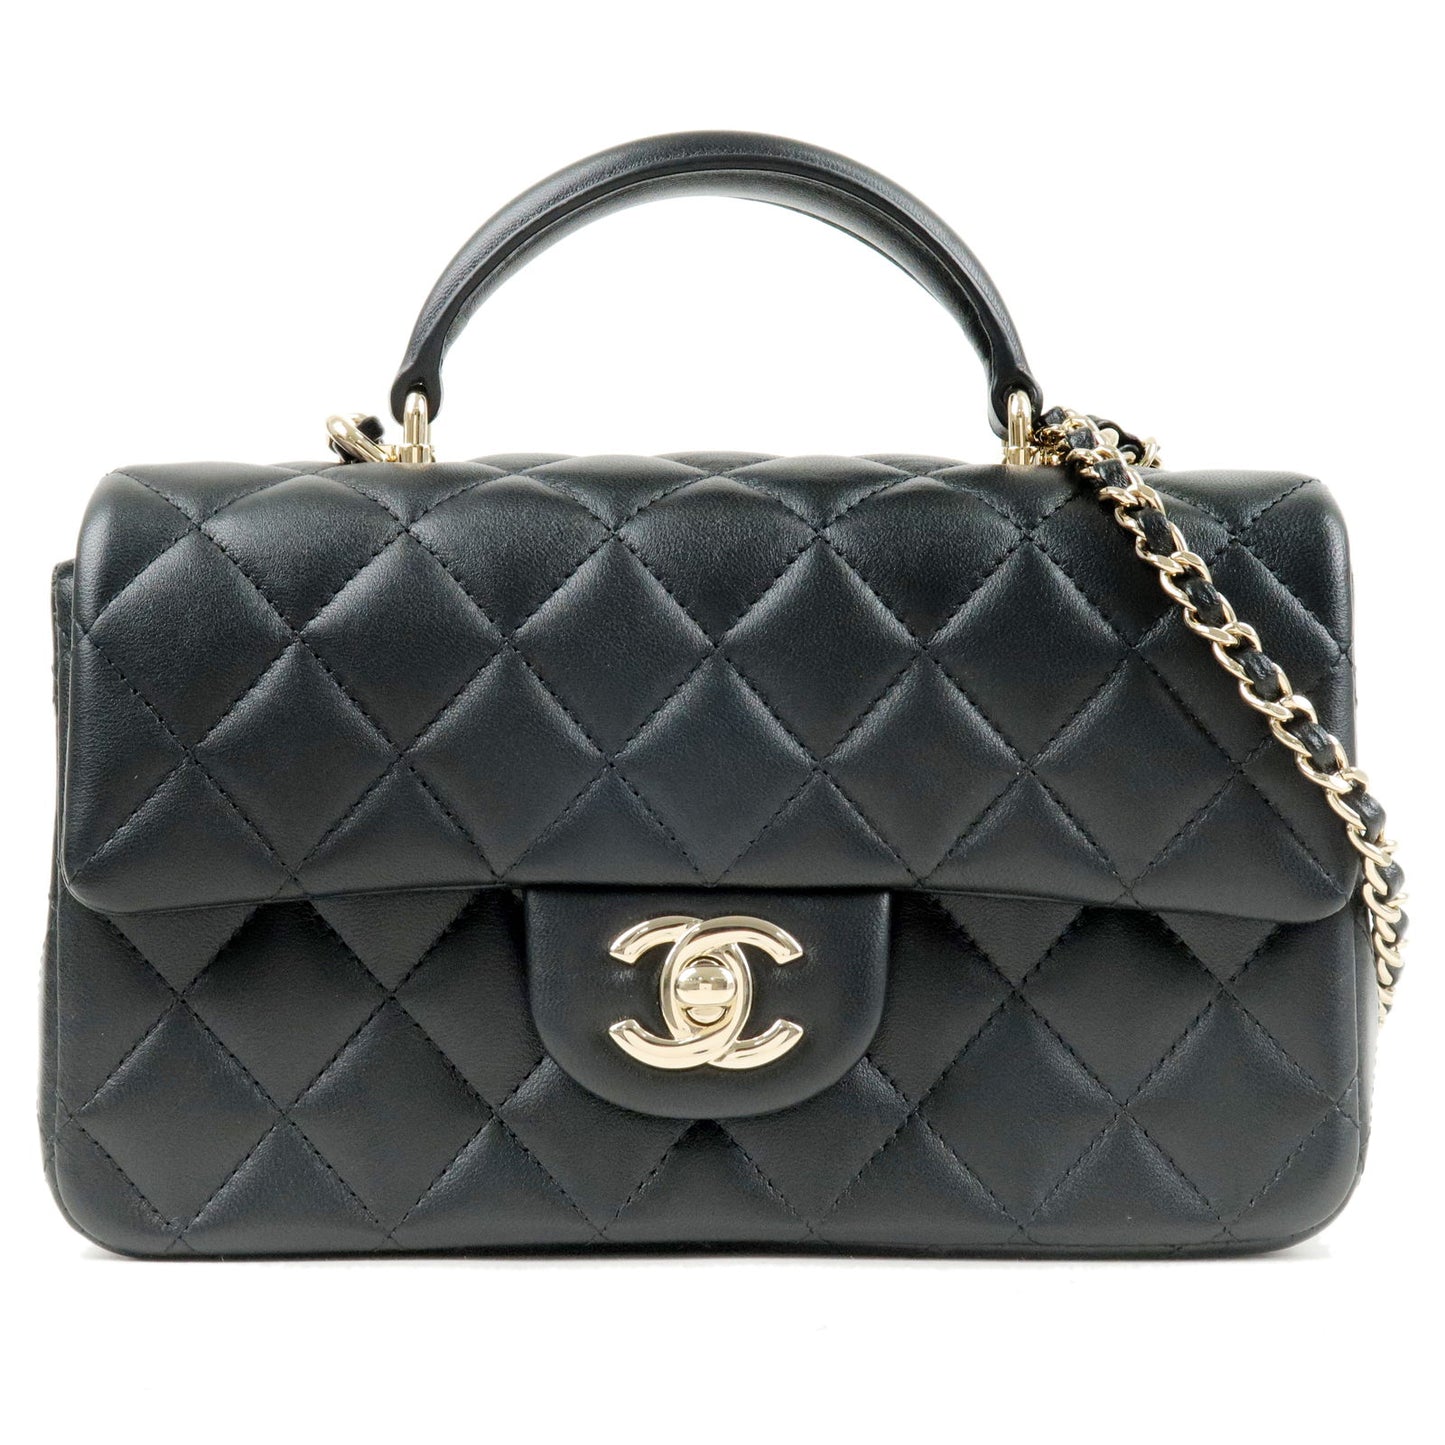 Handbags Chanel Chanel Mini Classic Handbag Timeless CC Flap Black Quilted Canvas Clutch